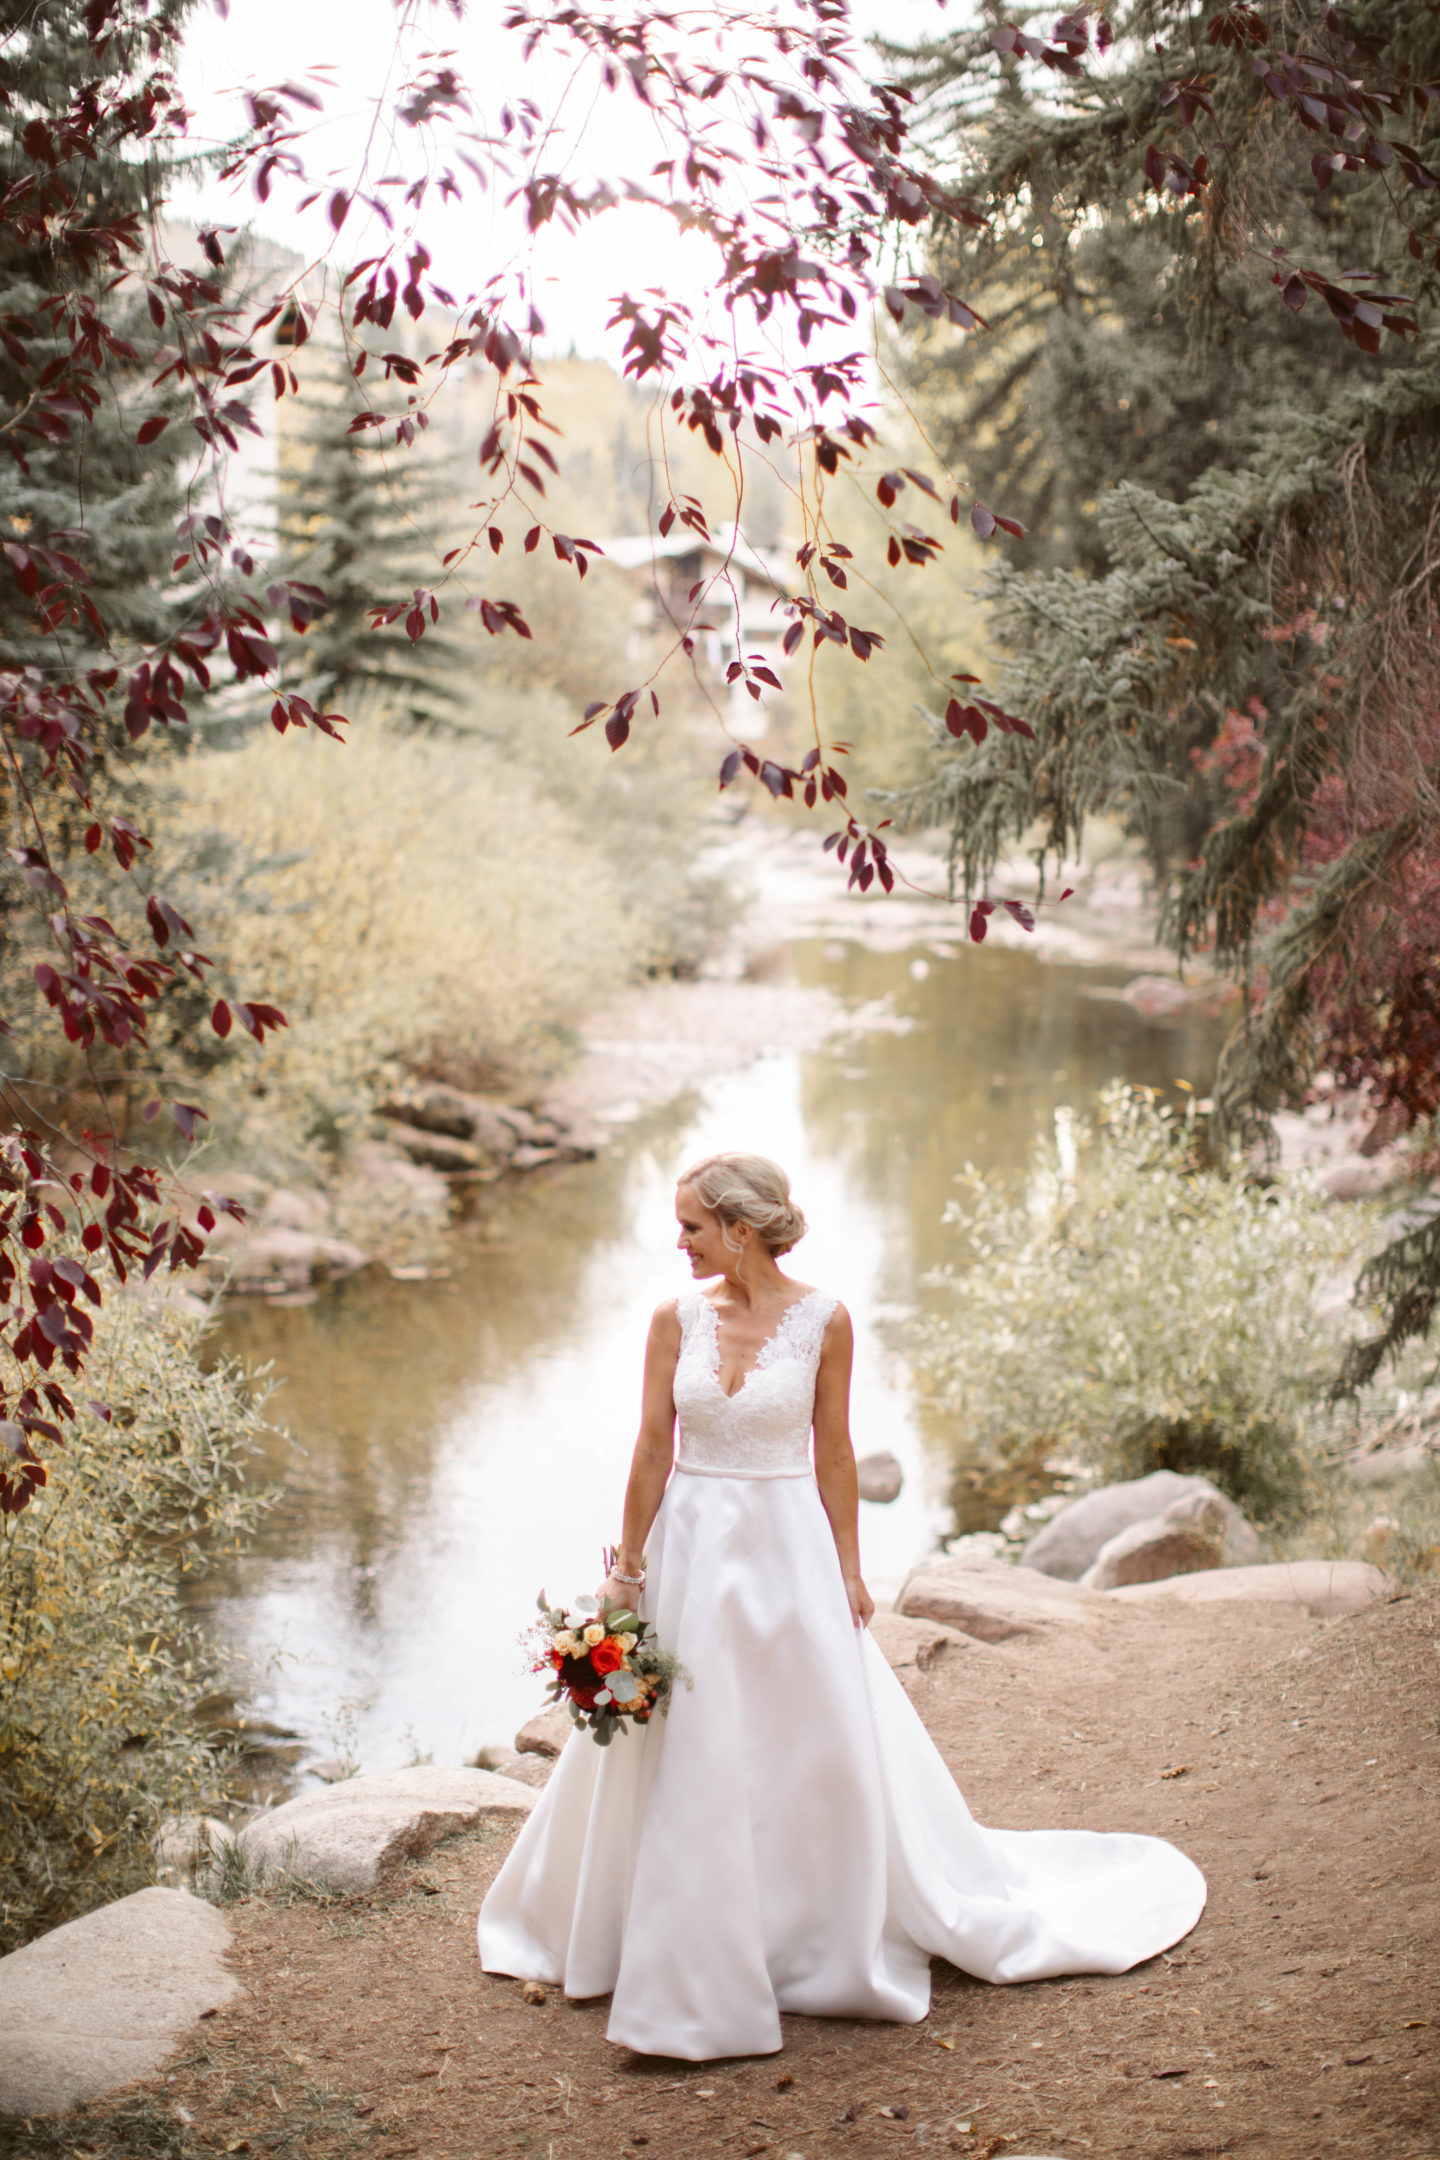 Vail Micro Wedding | Fall wedding in Colorado | COVID wedding | Vail, CO wedding | Bridal portrait